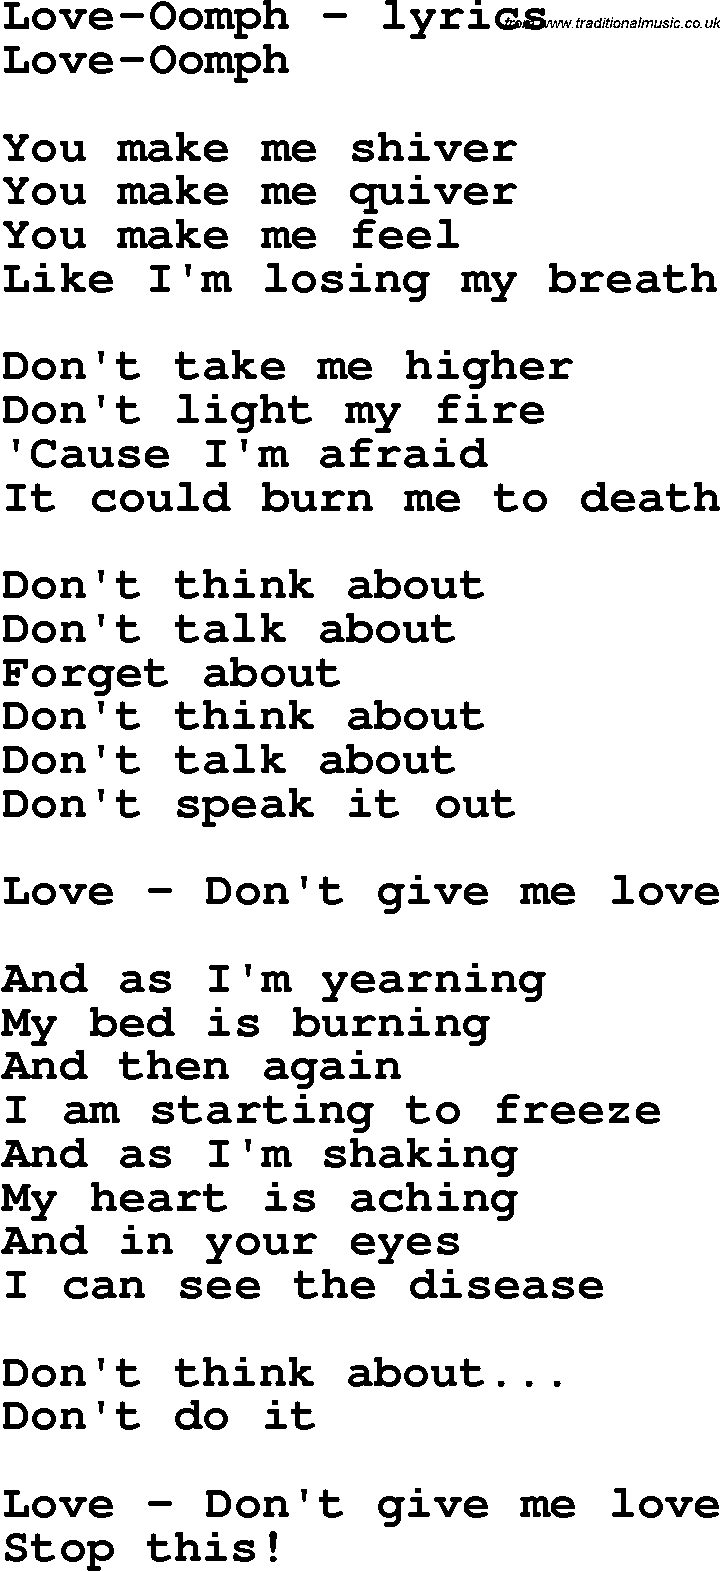 Love Song Lyrics for: Love-Oomph